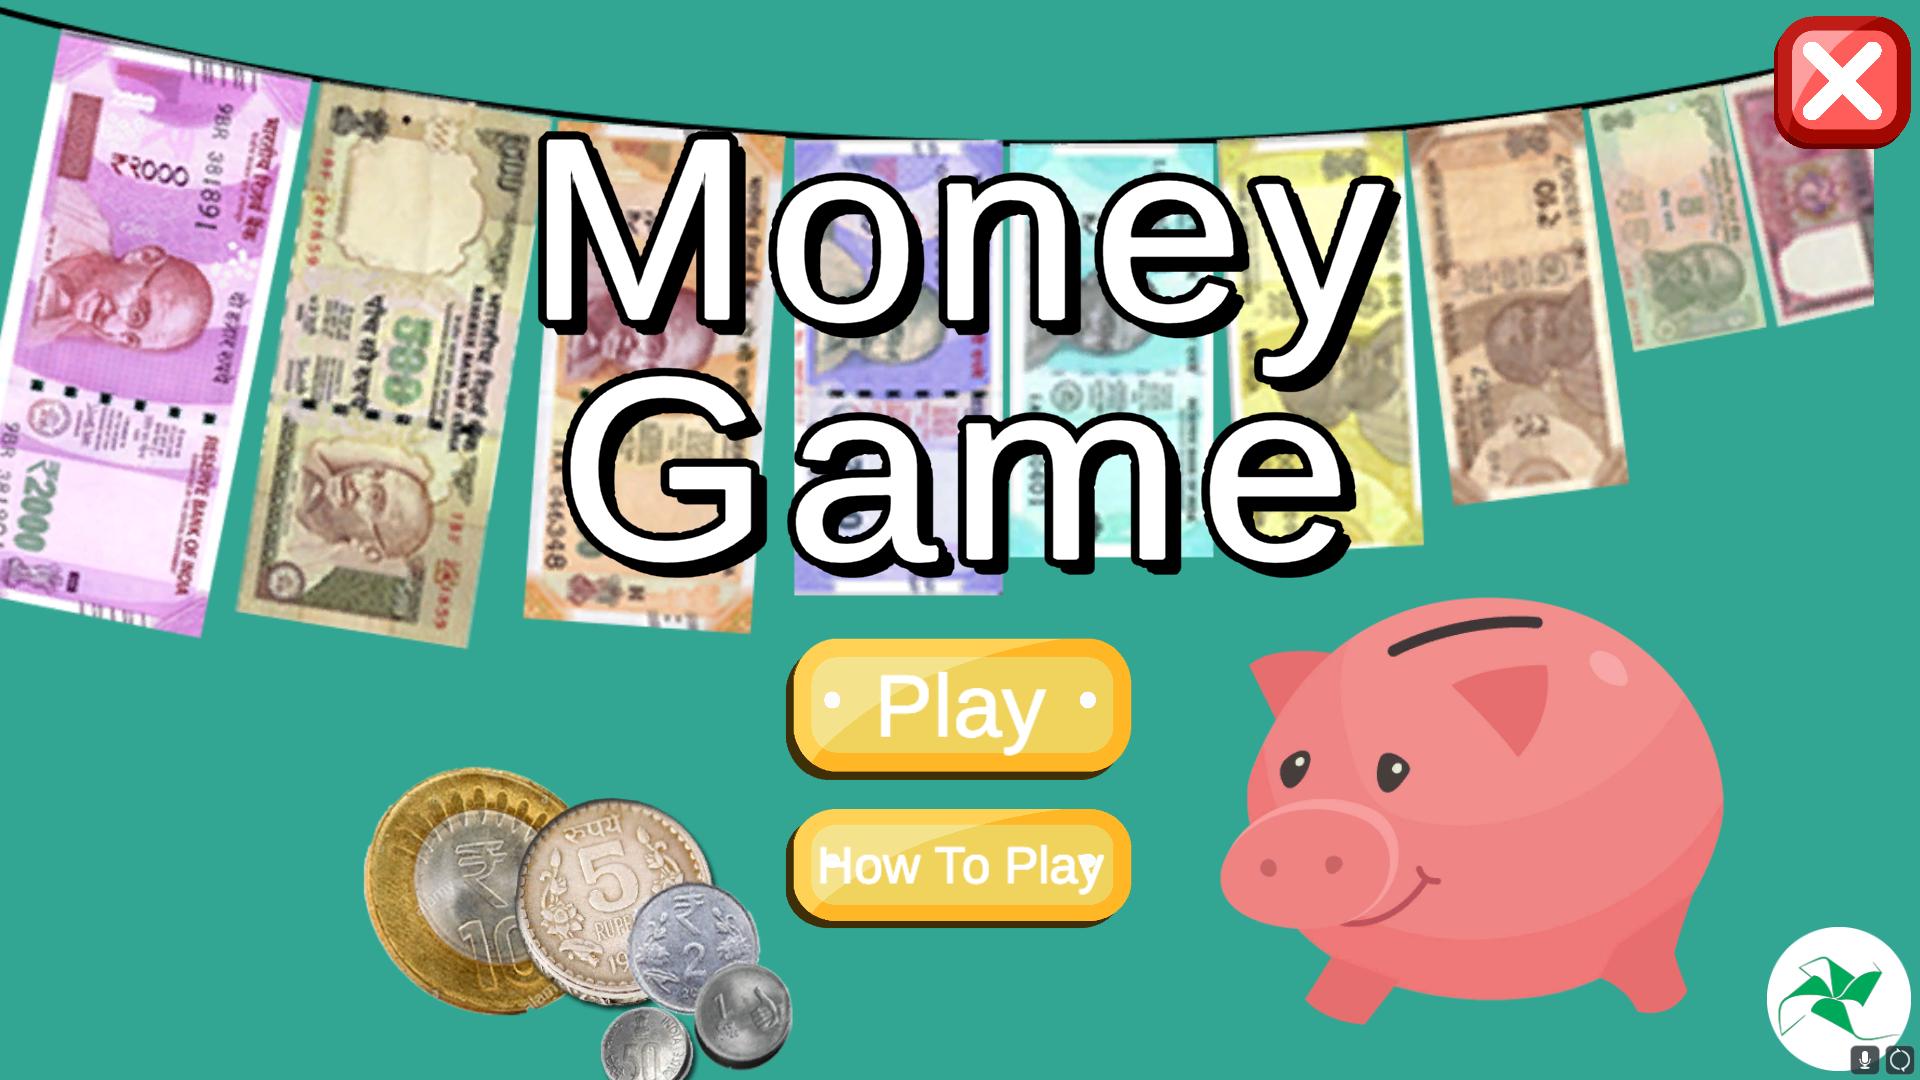 Game money. Money game 2. Get money game. No more money game. Game money apk